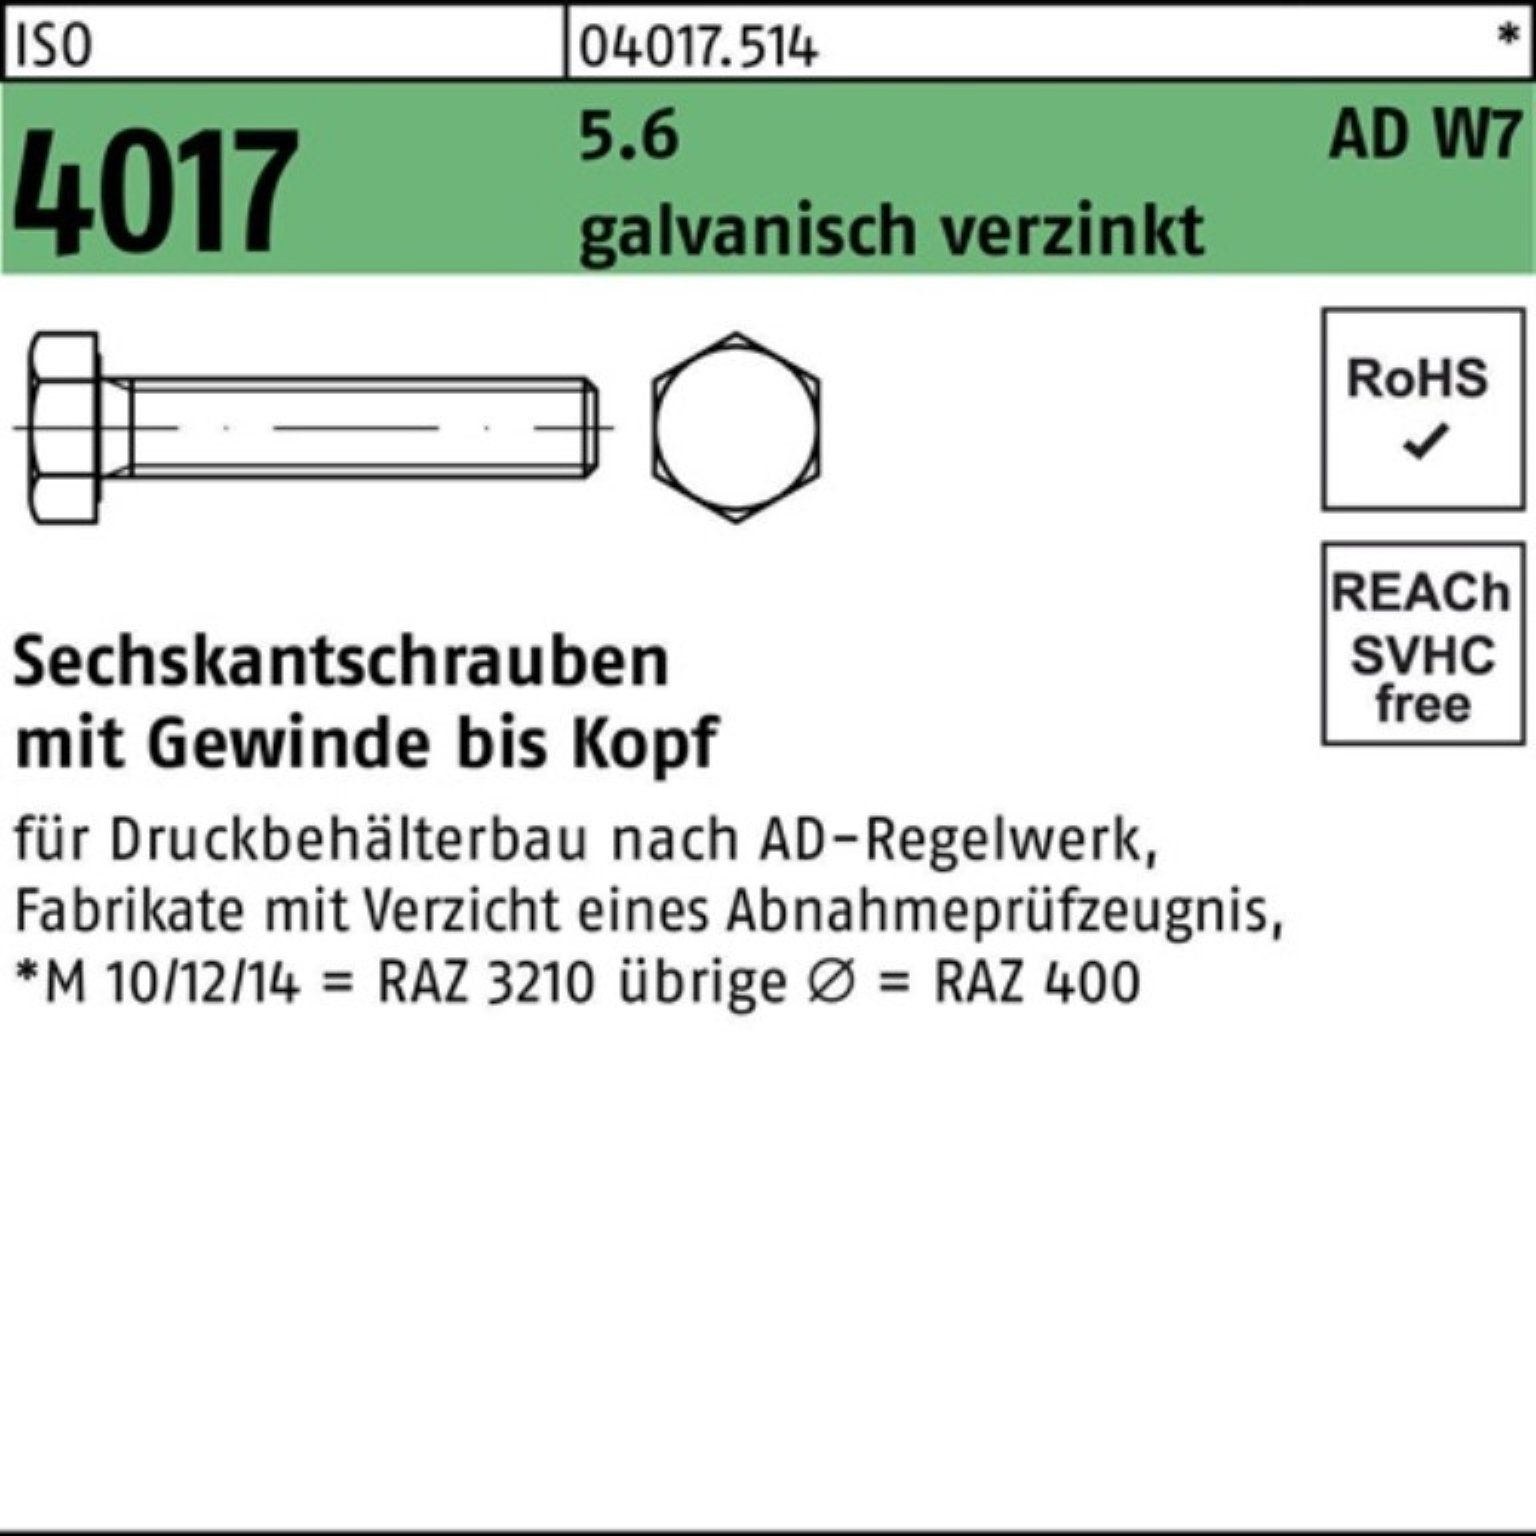 Pack Sechskantschraube Bufab W7 M27x 4017 5.6 galv.verz. 100er ISO 95 Sechskantschraube AD VG